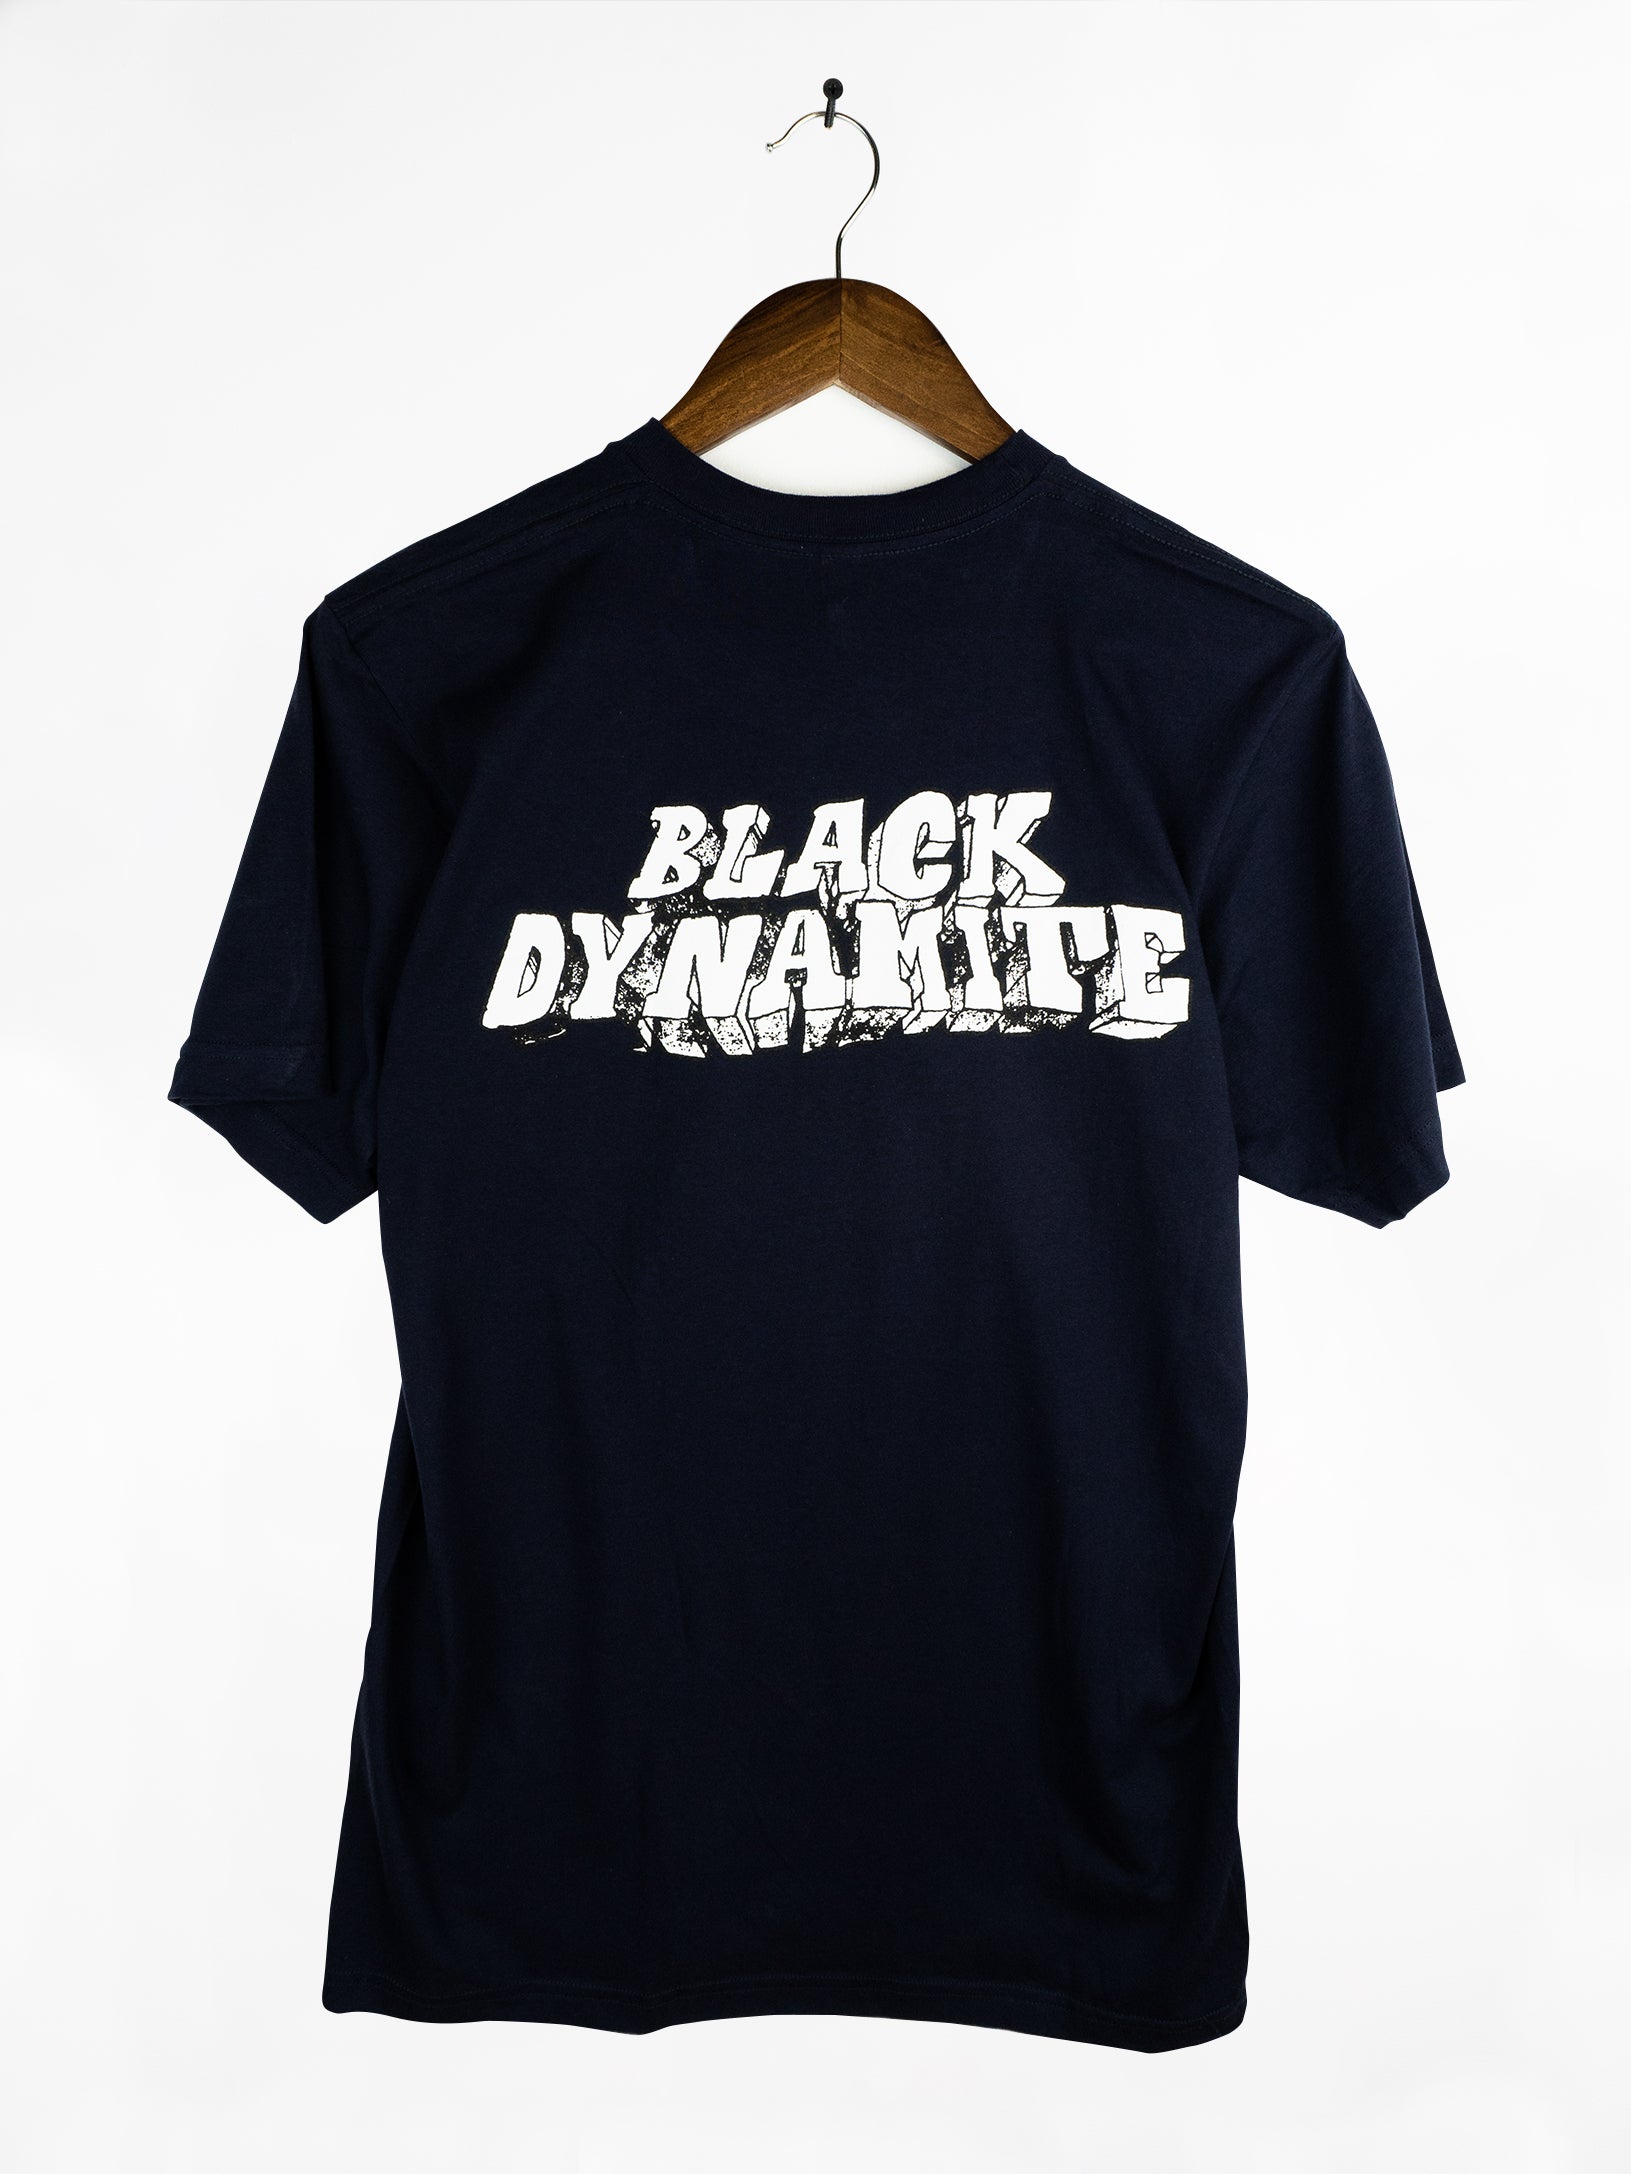 BLACK DYNAMITE! Mens "Black Dynamite Crew" Tee - Navy by Titmouse Back View